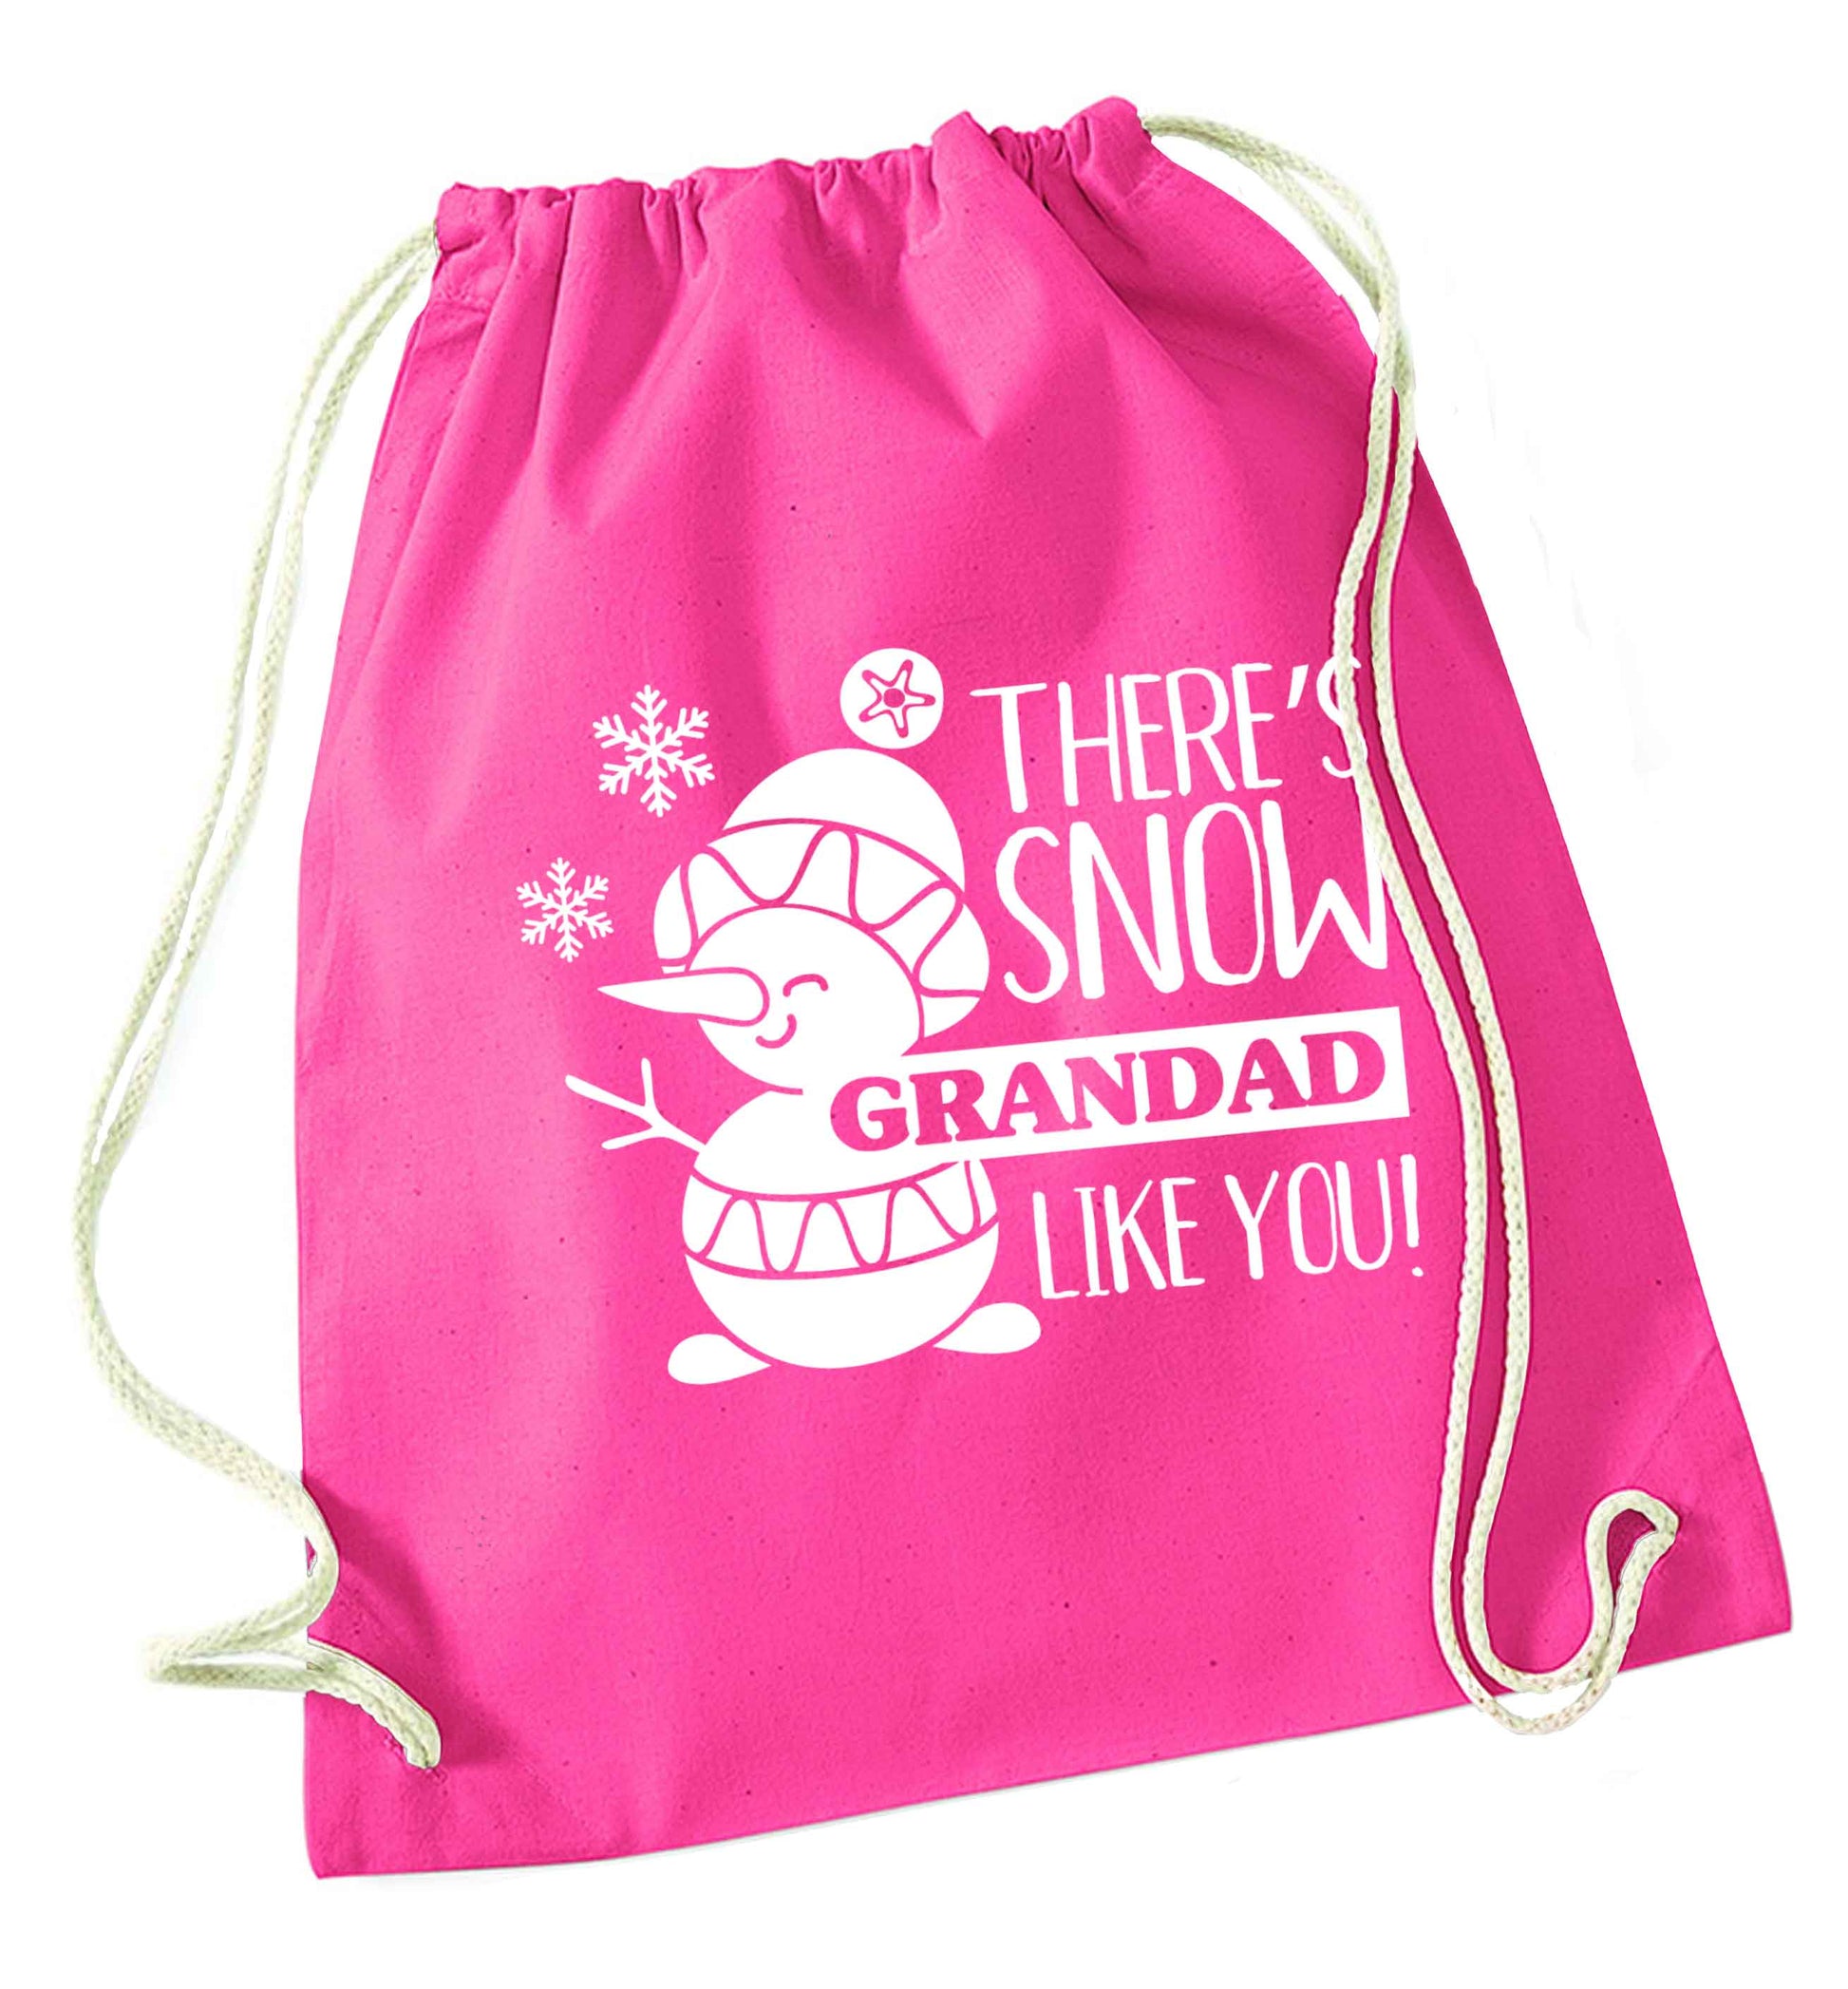 There's snow grandad like you pink drawstring bag